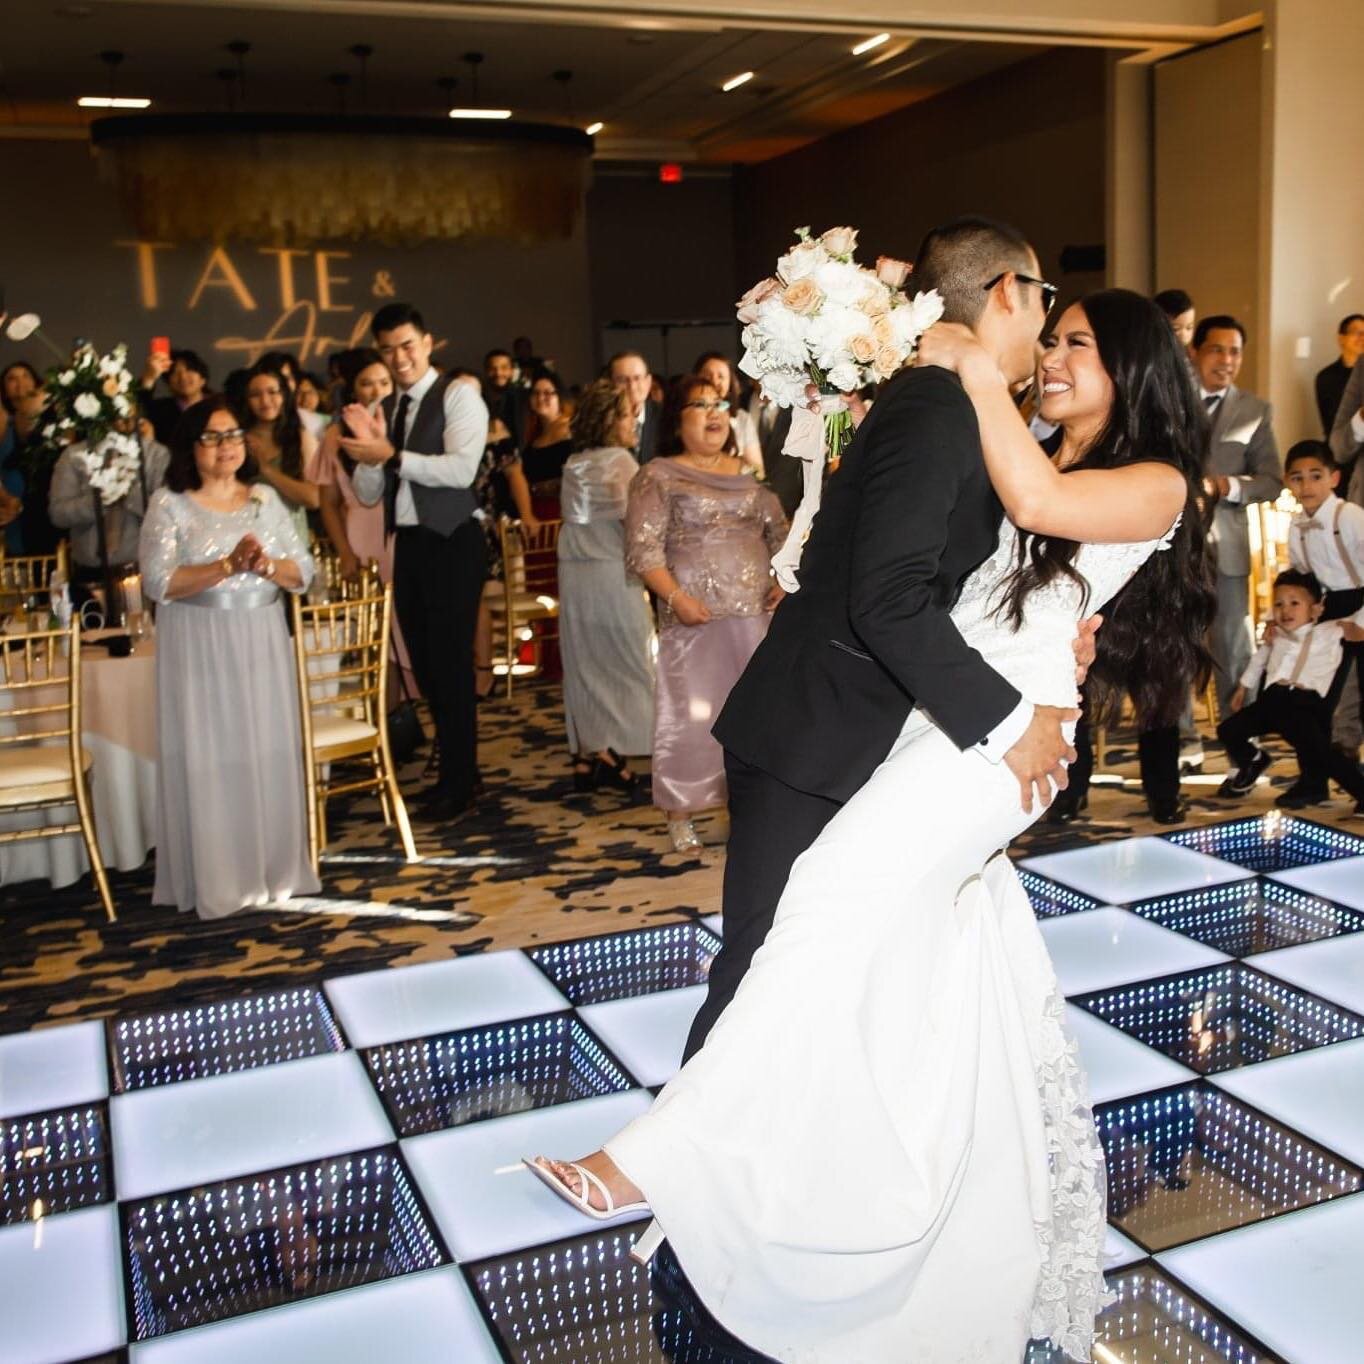 Best wedding combo- Our LED dance floor, custom Go-Bo, AND @rogerthedj
📸 :: @cpixaperture